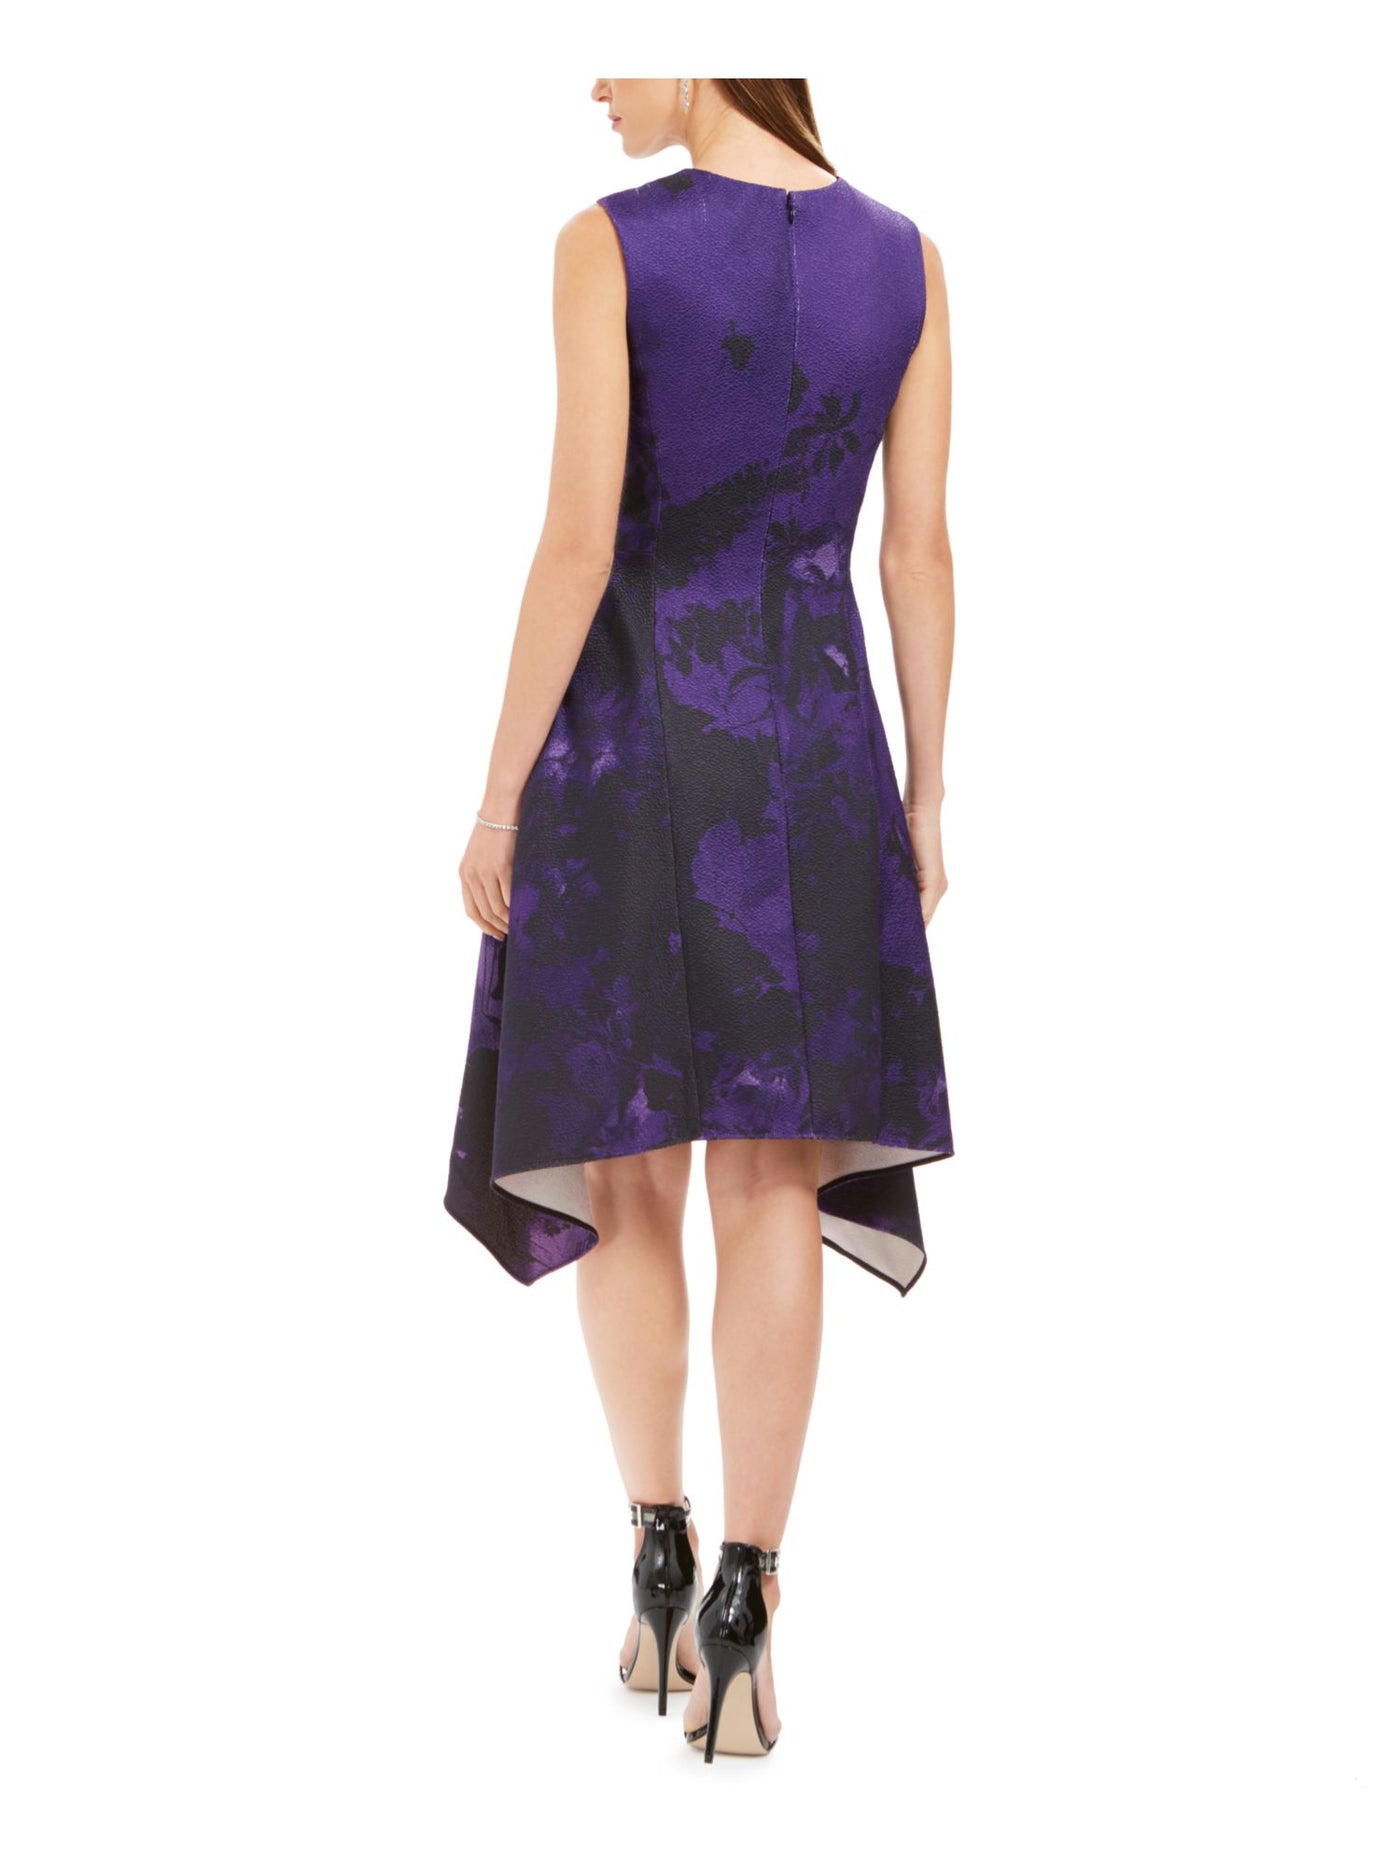 NATORI Womens Purple Zippered Printed Sleeveless Jewel Neck Above The Knee Party Fit + Flare Dress 0